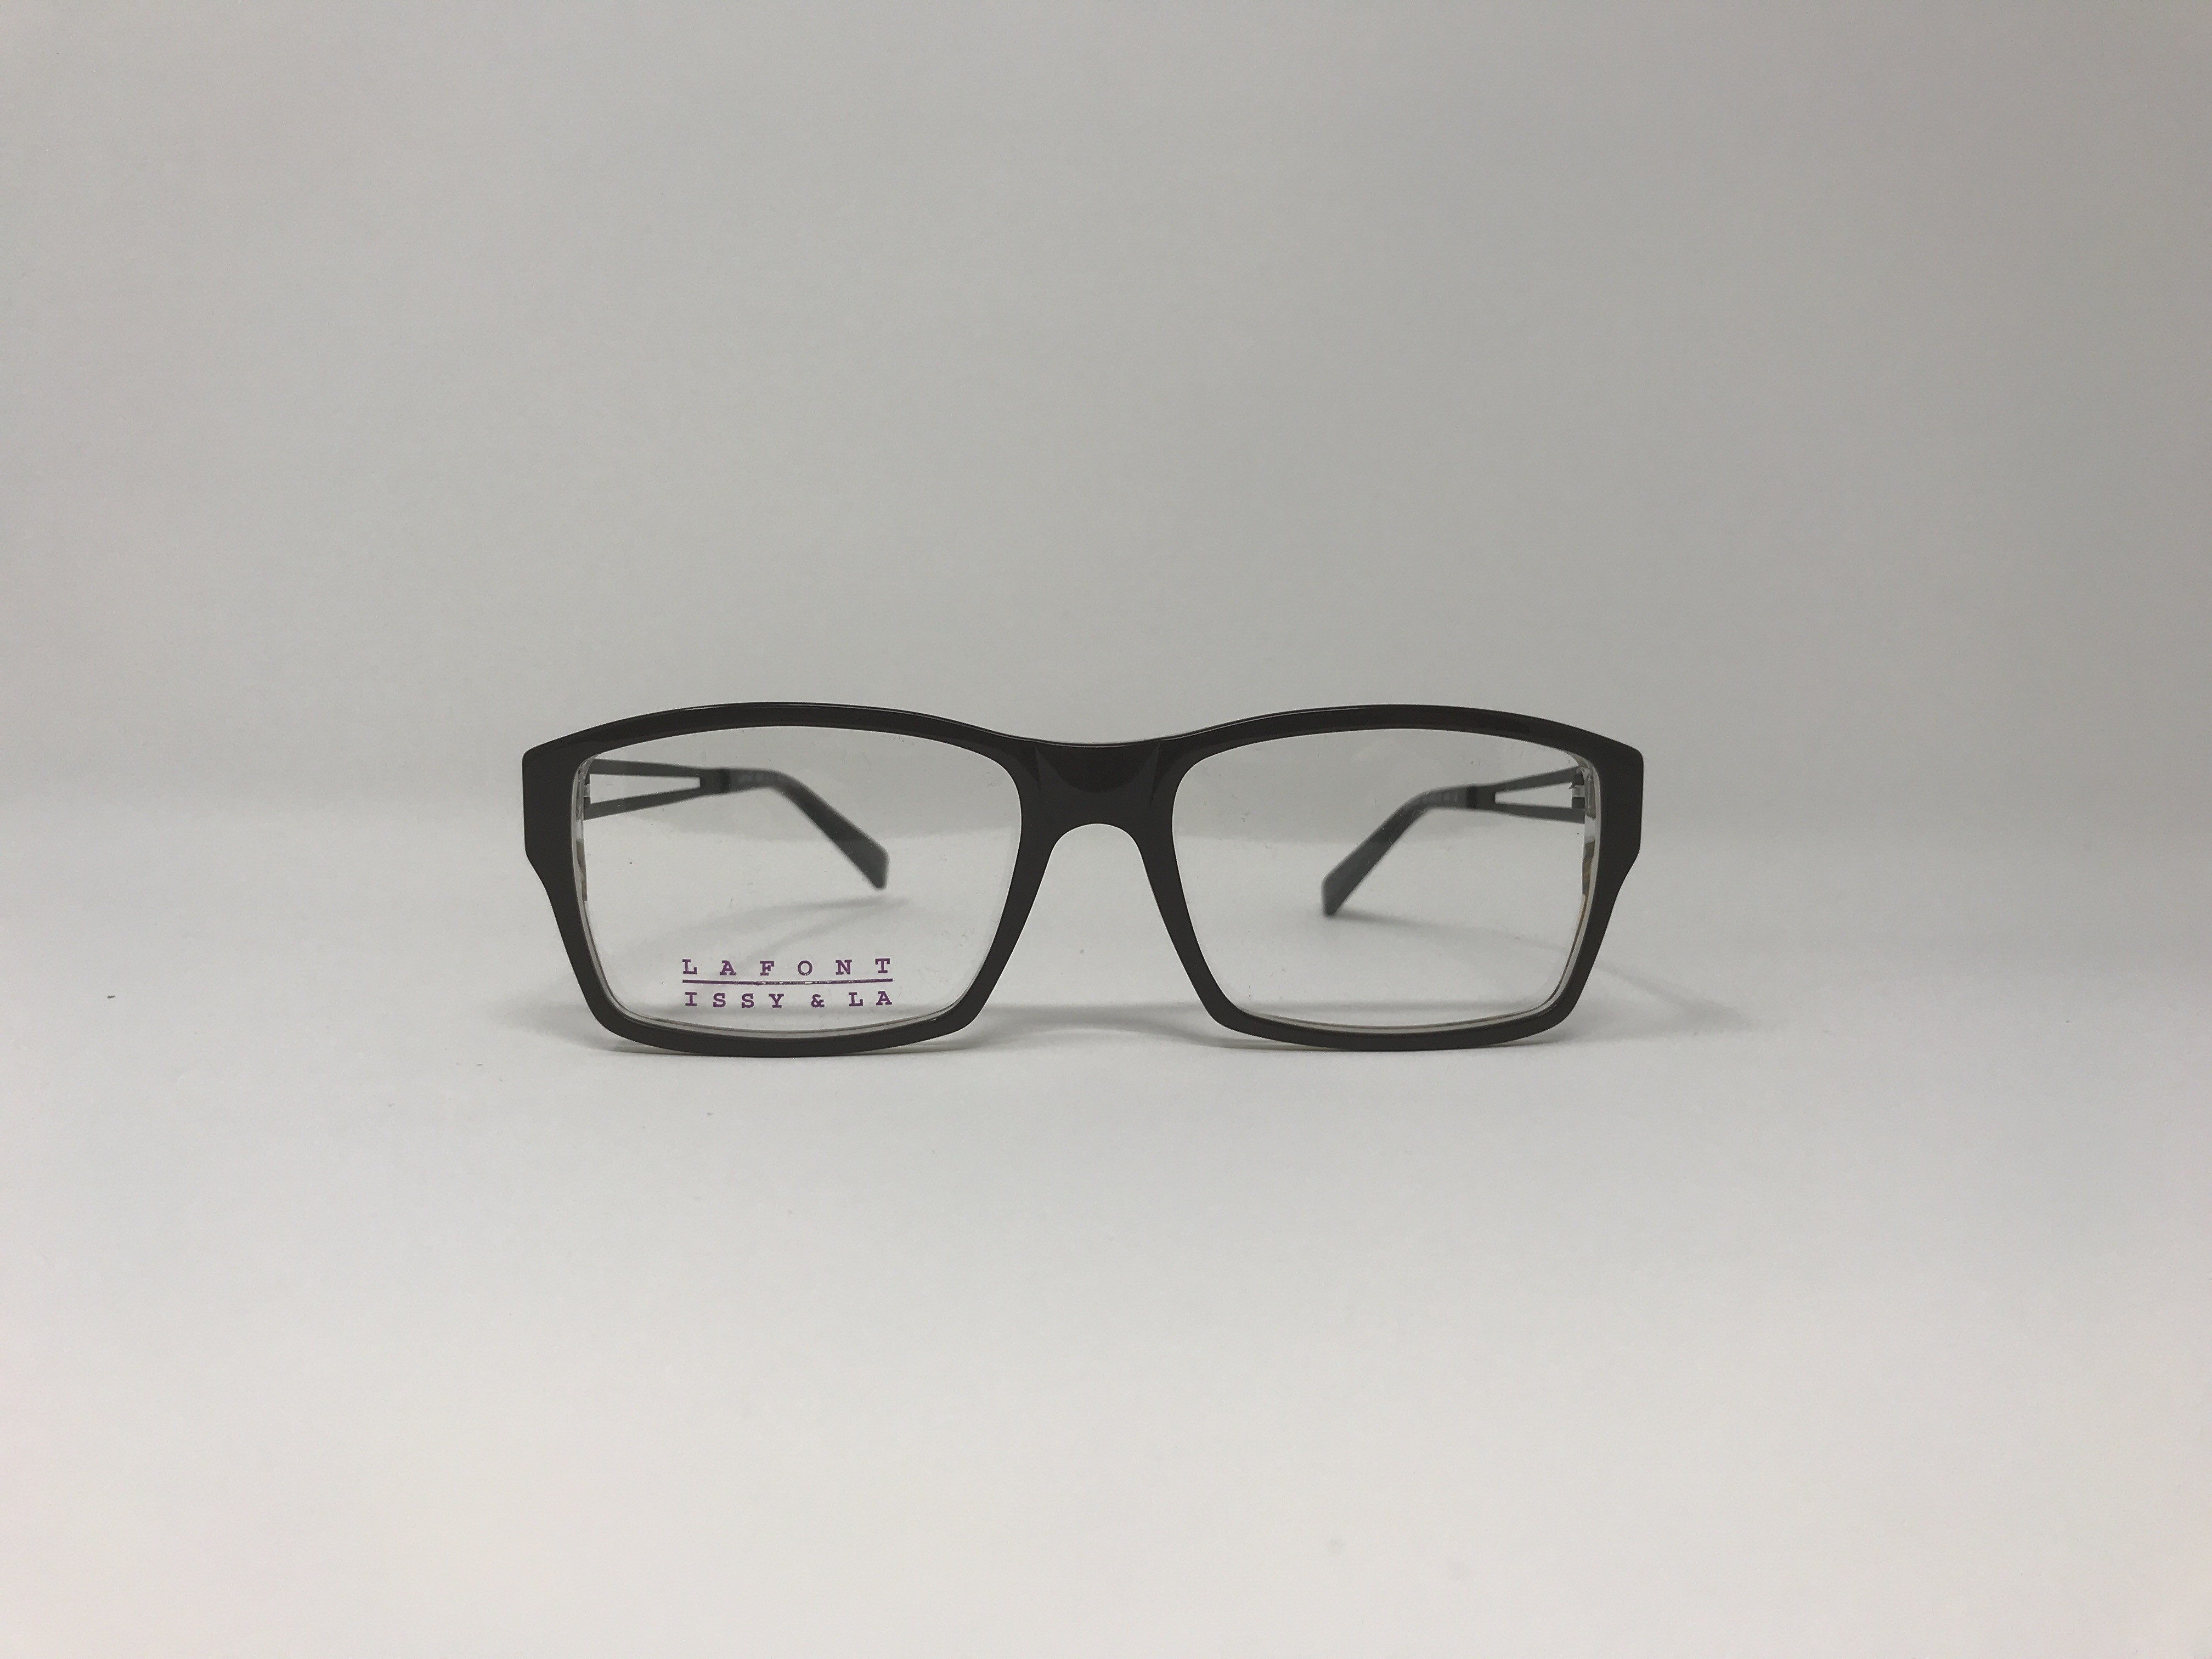 Lafont Issy & La Gringo 522 Men's Eyeglasses